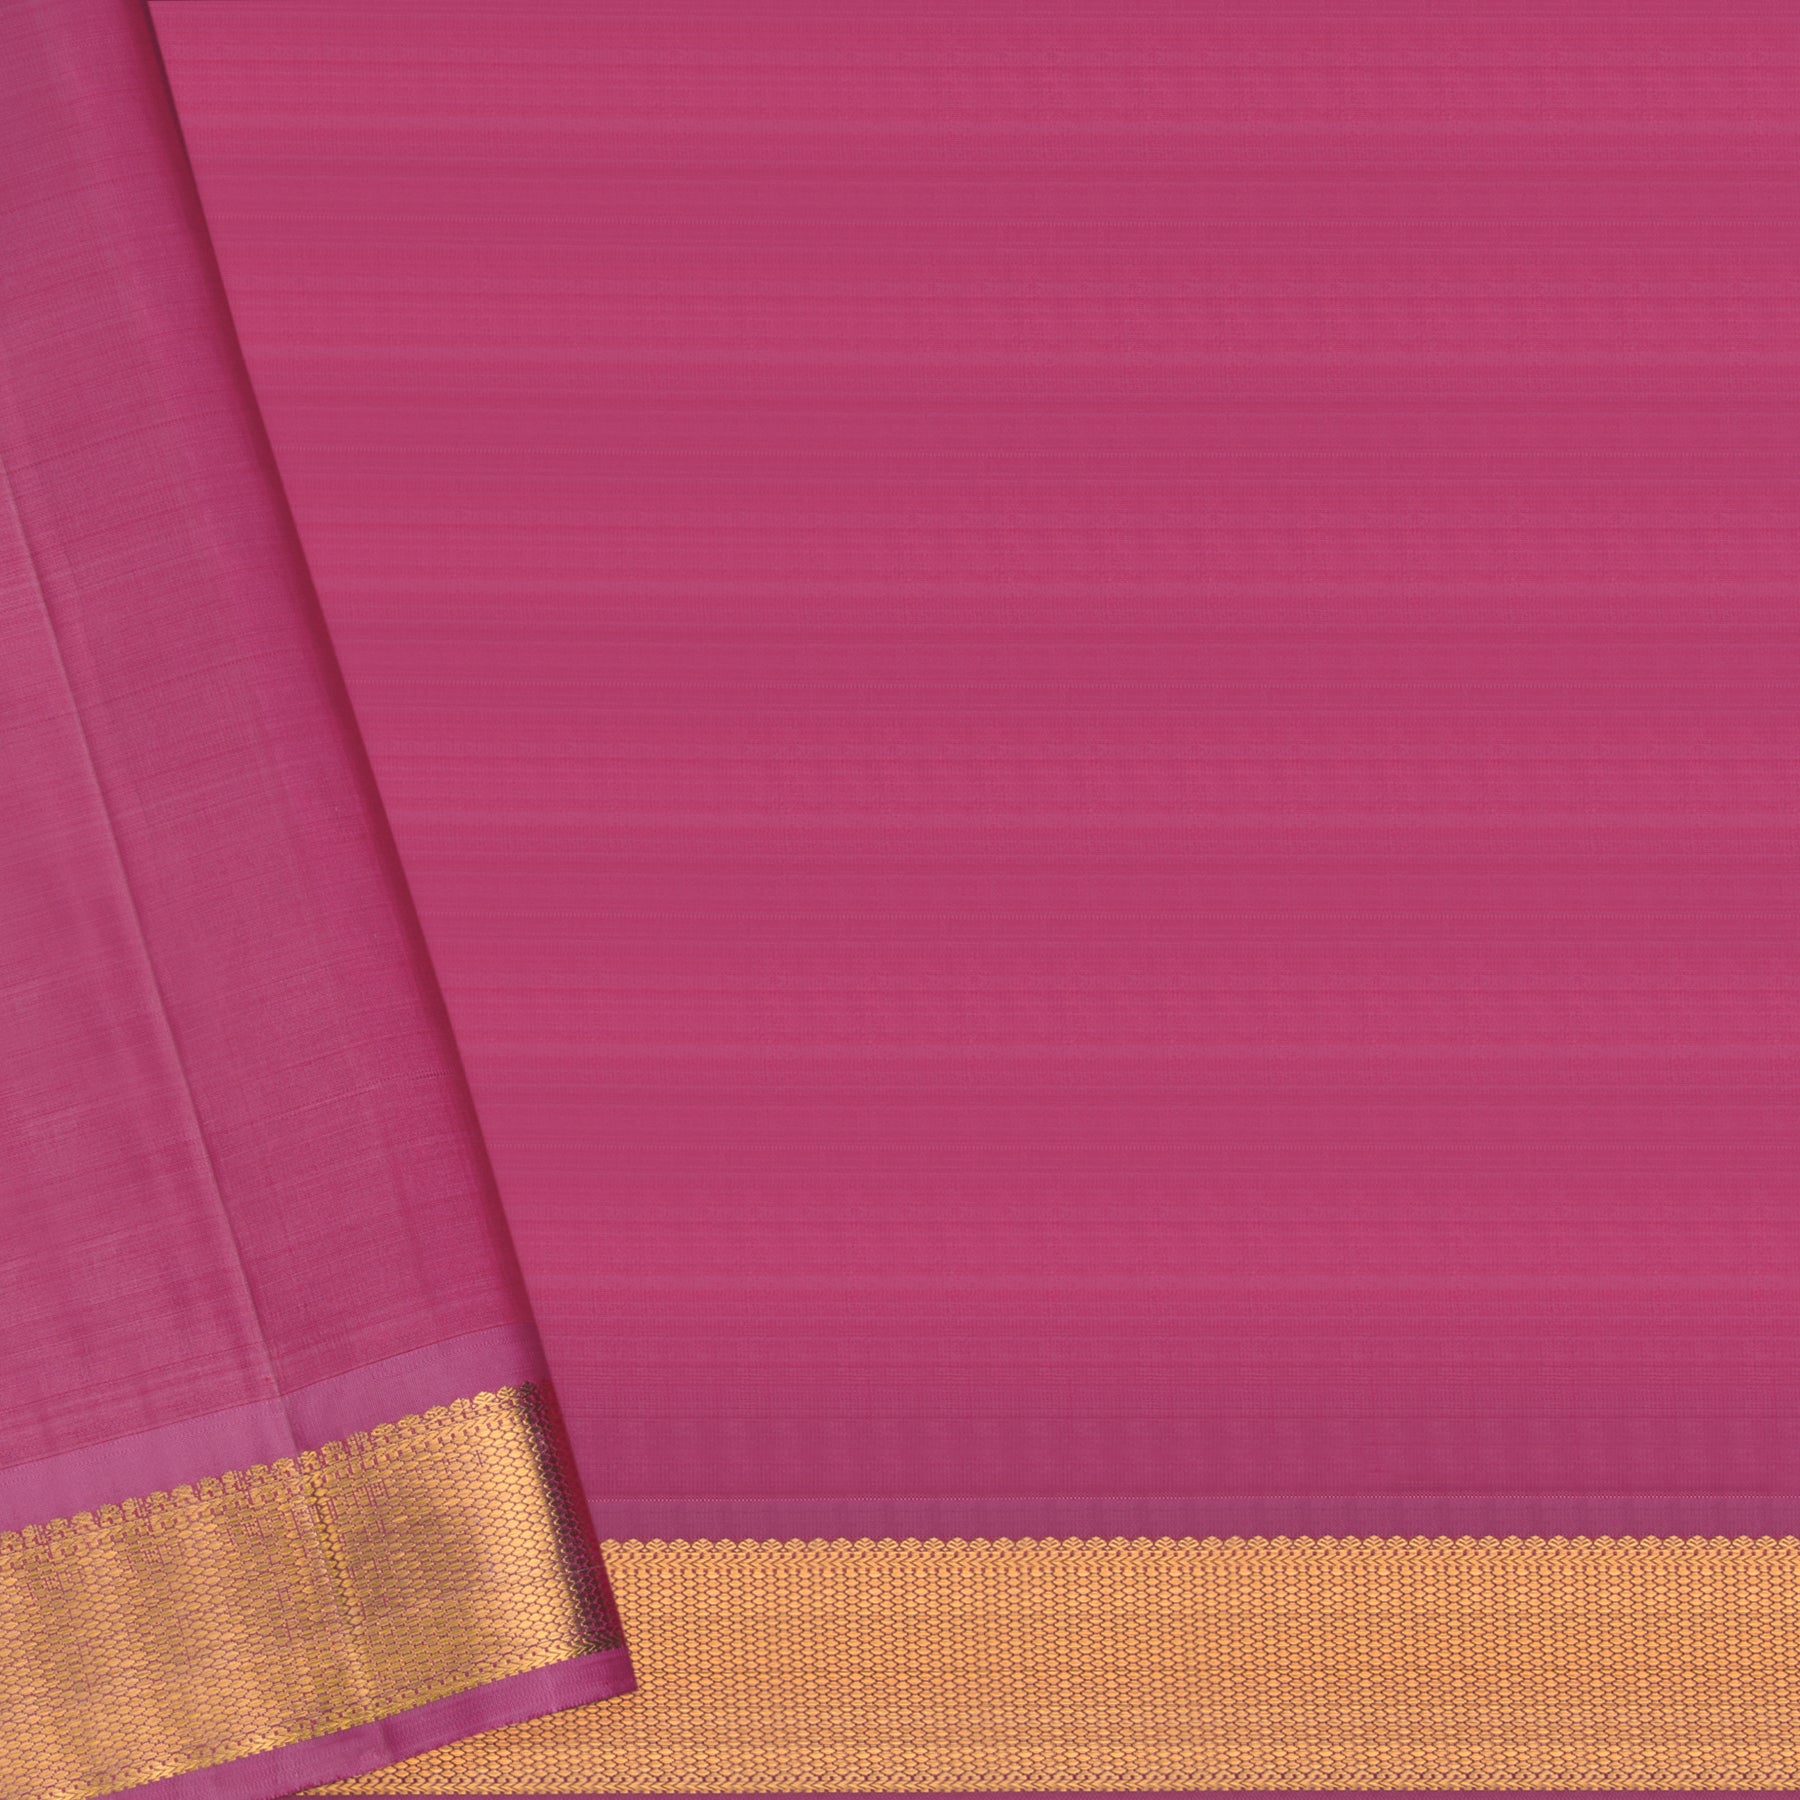 Kanakavalli Kanjivaram Silk Sari 23-611-HS001-04527 - Blouse View